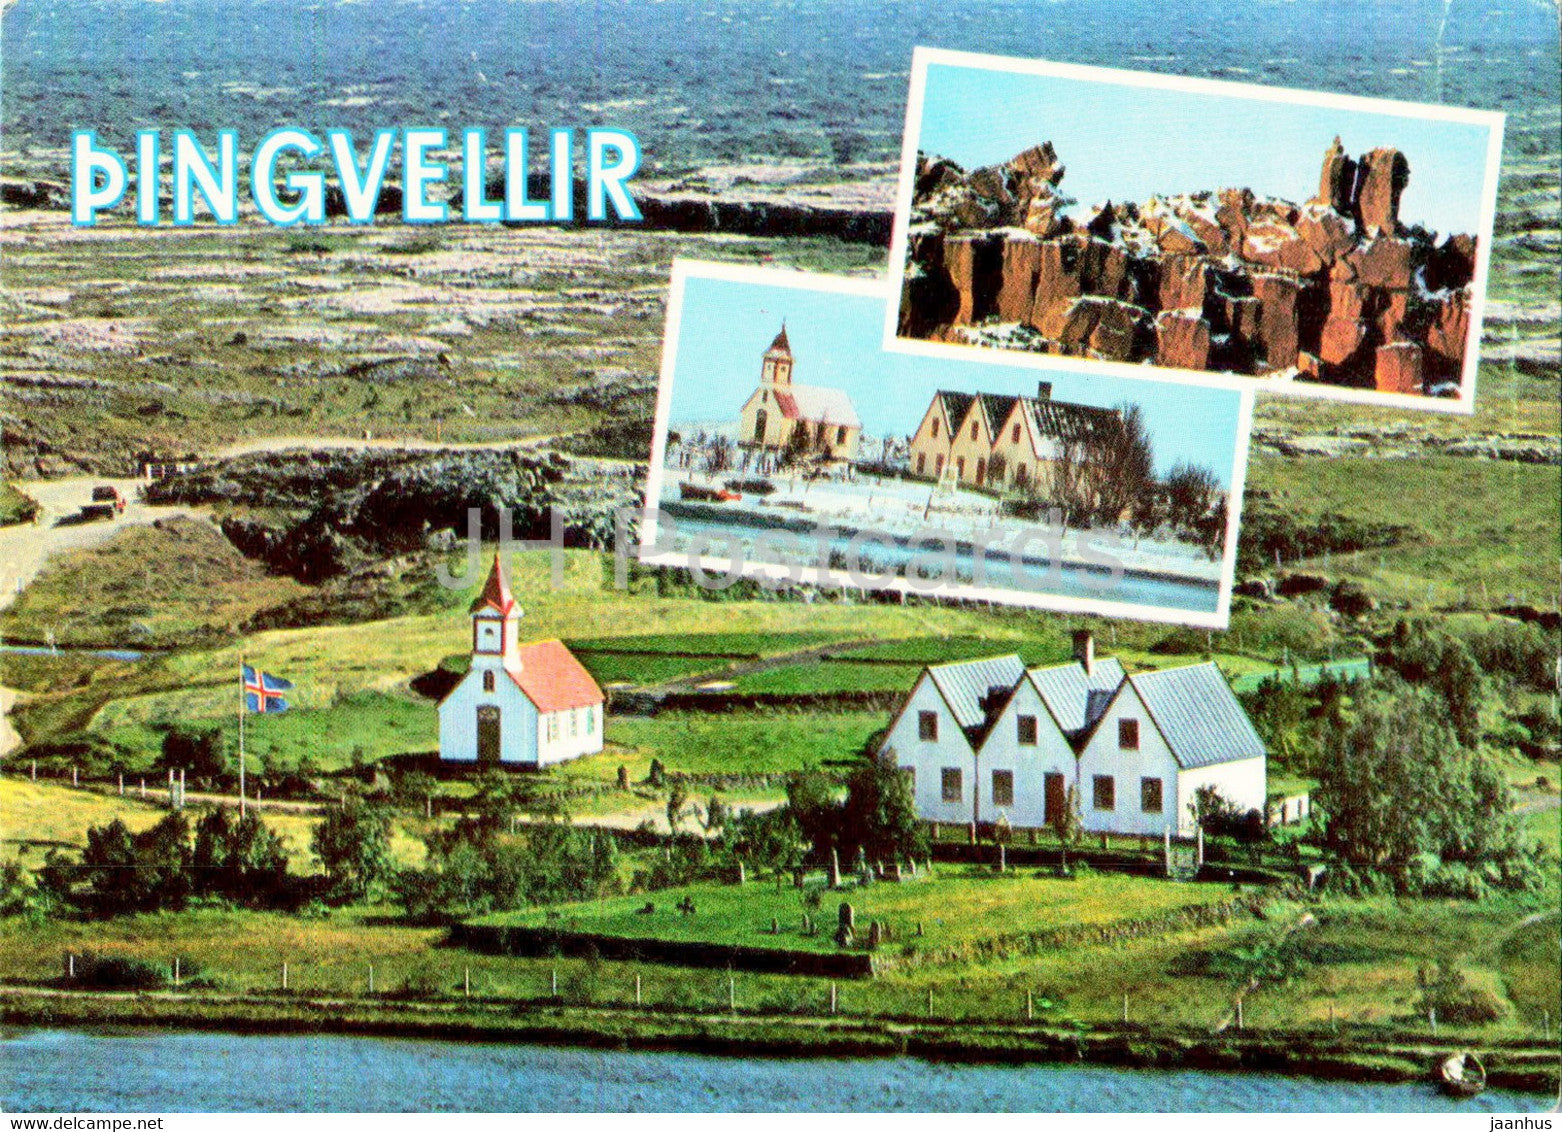 Thingvellir - The site of the Icelandic Parliament - Iceland - unused - JH Postcards